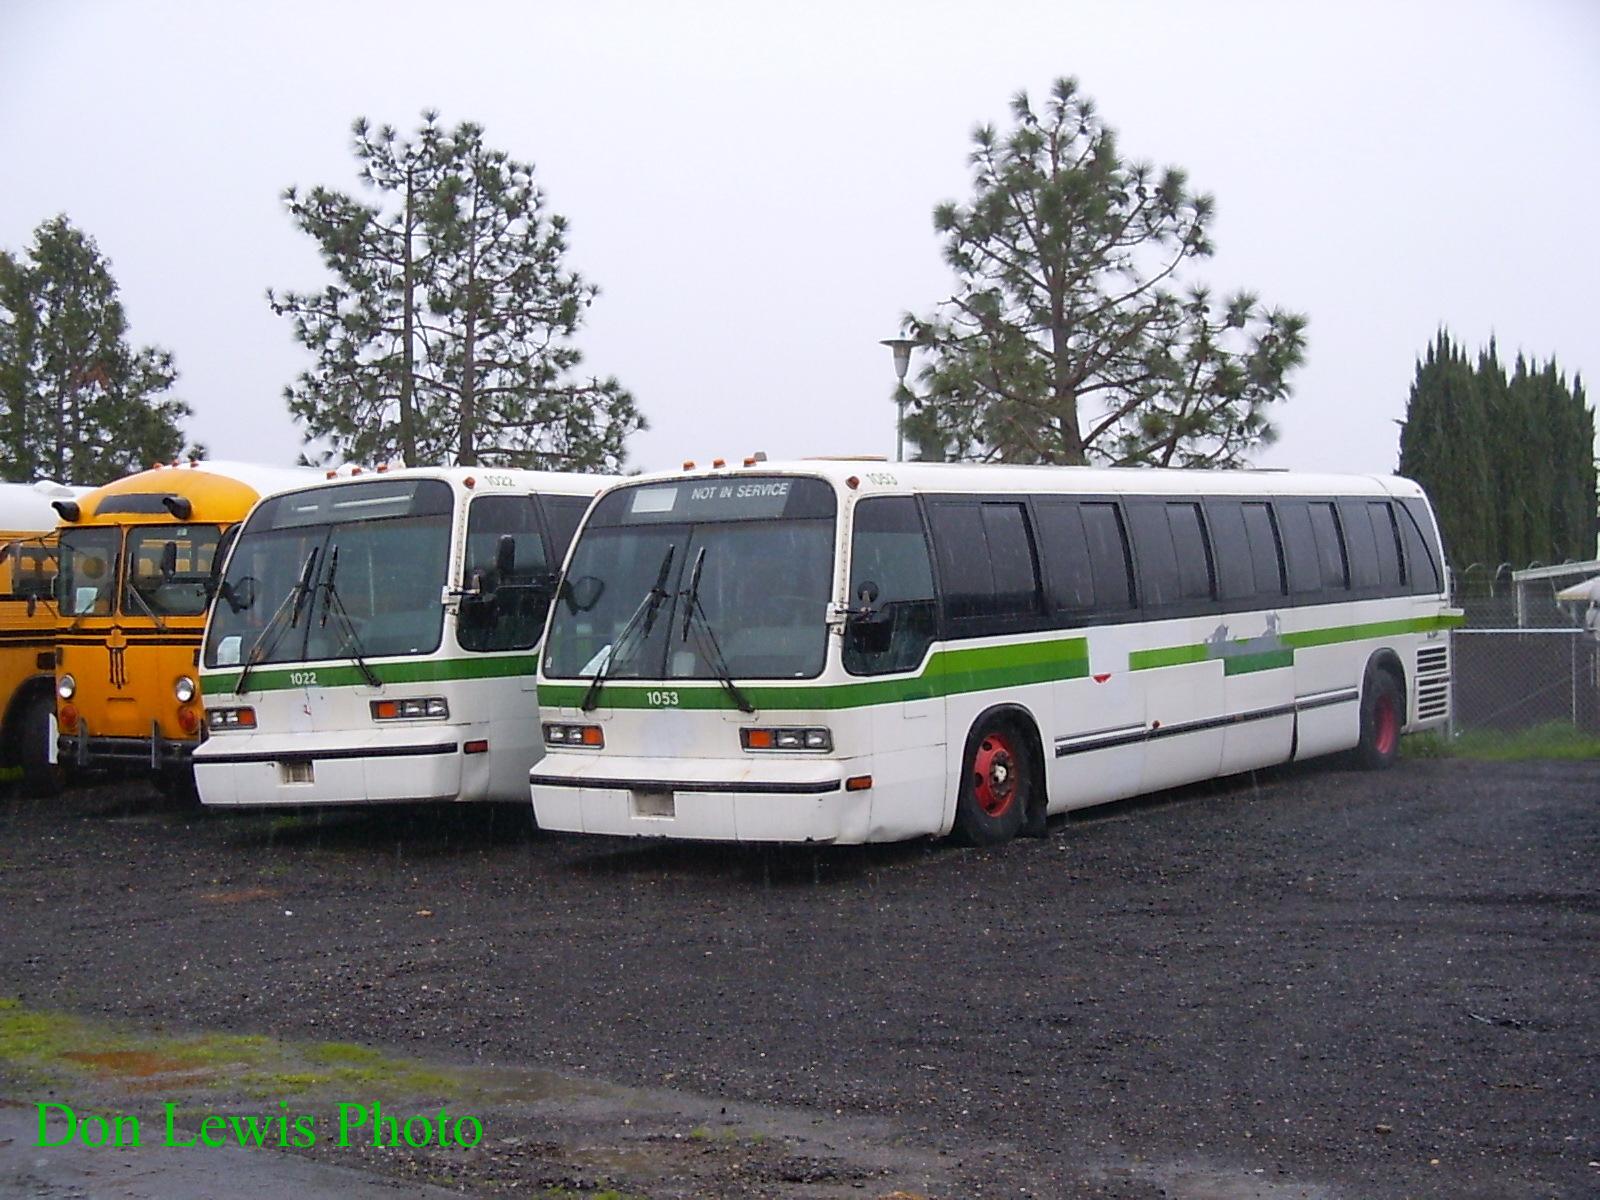 Descriptionnyc transit gmc rts 4149 command center bus.jpg. 